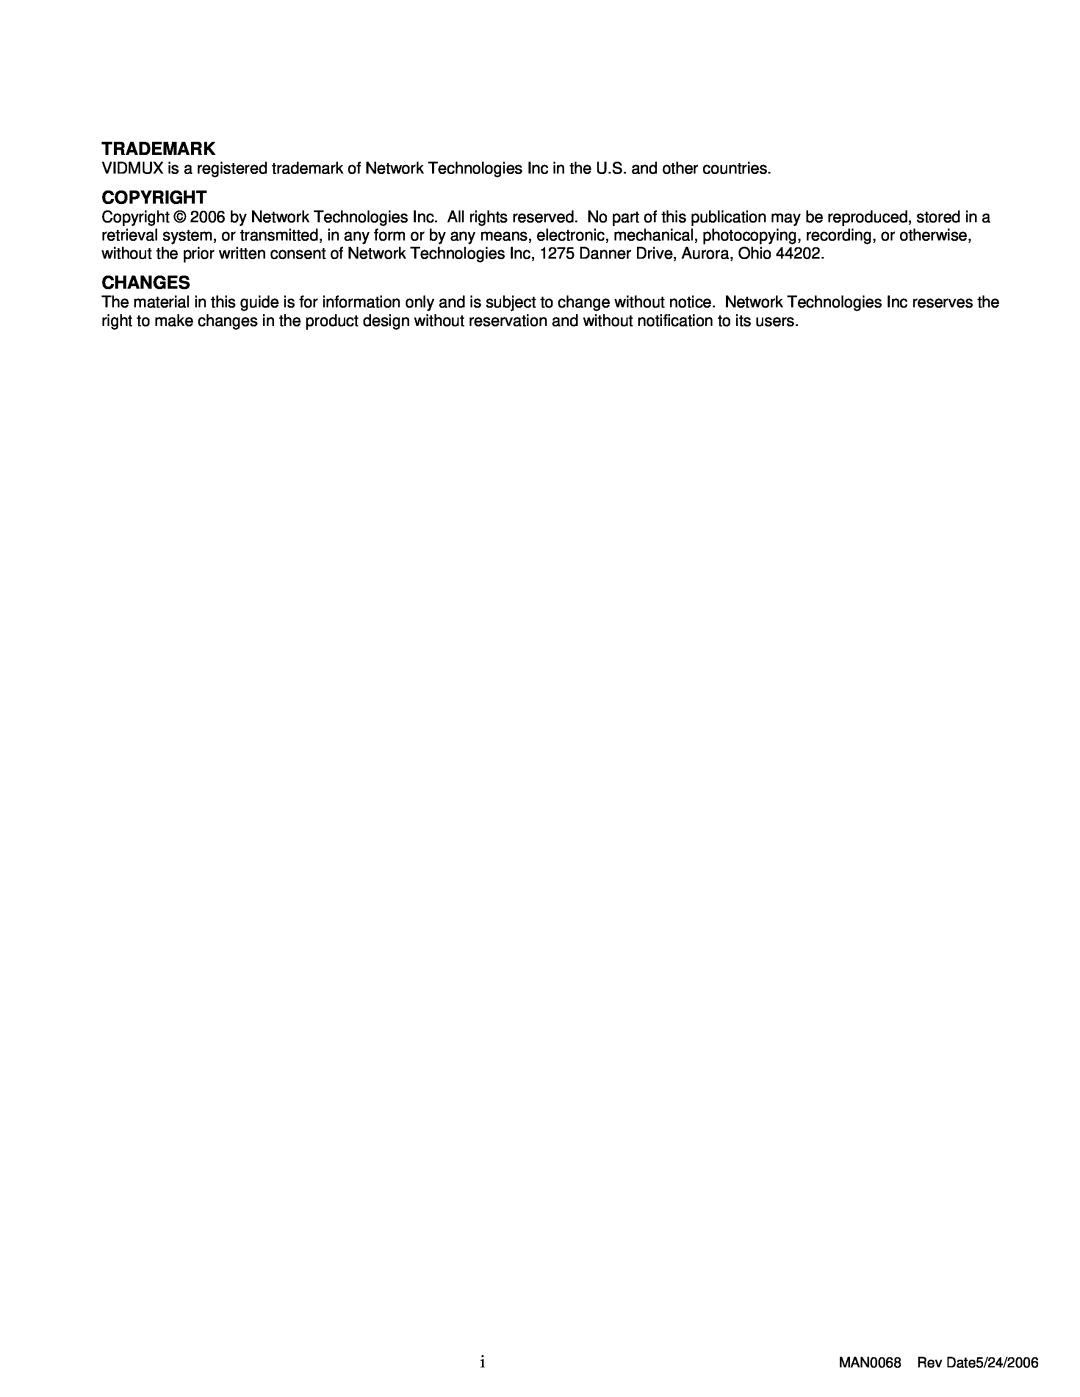 Network Technologies SE-DVI-2 operation manual Trademark, Copyright, Changes, MAN0068 Rev Date5/24/2006 